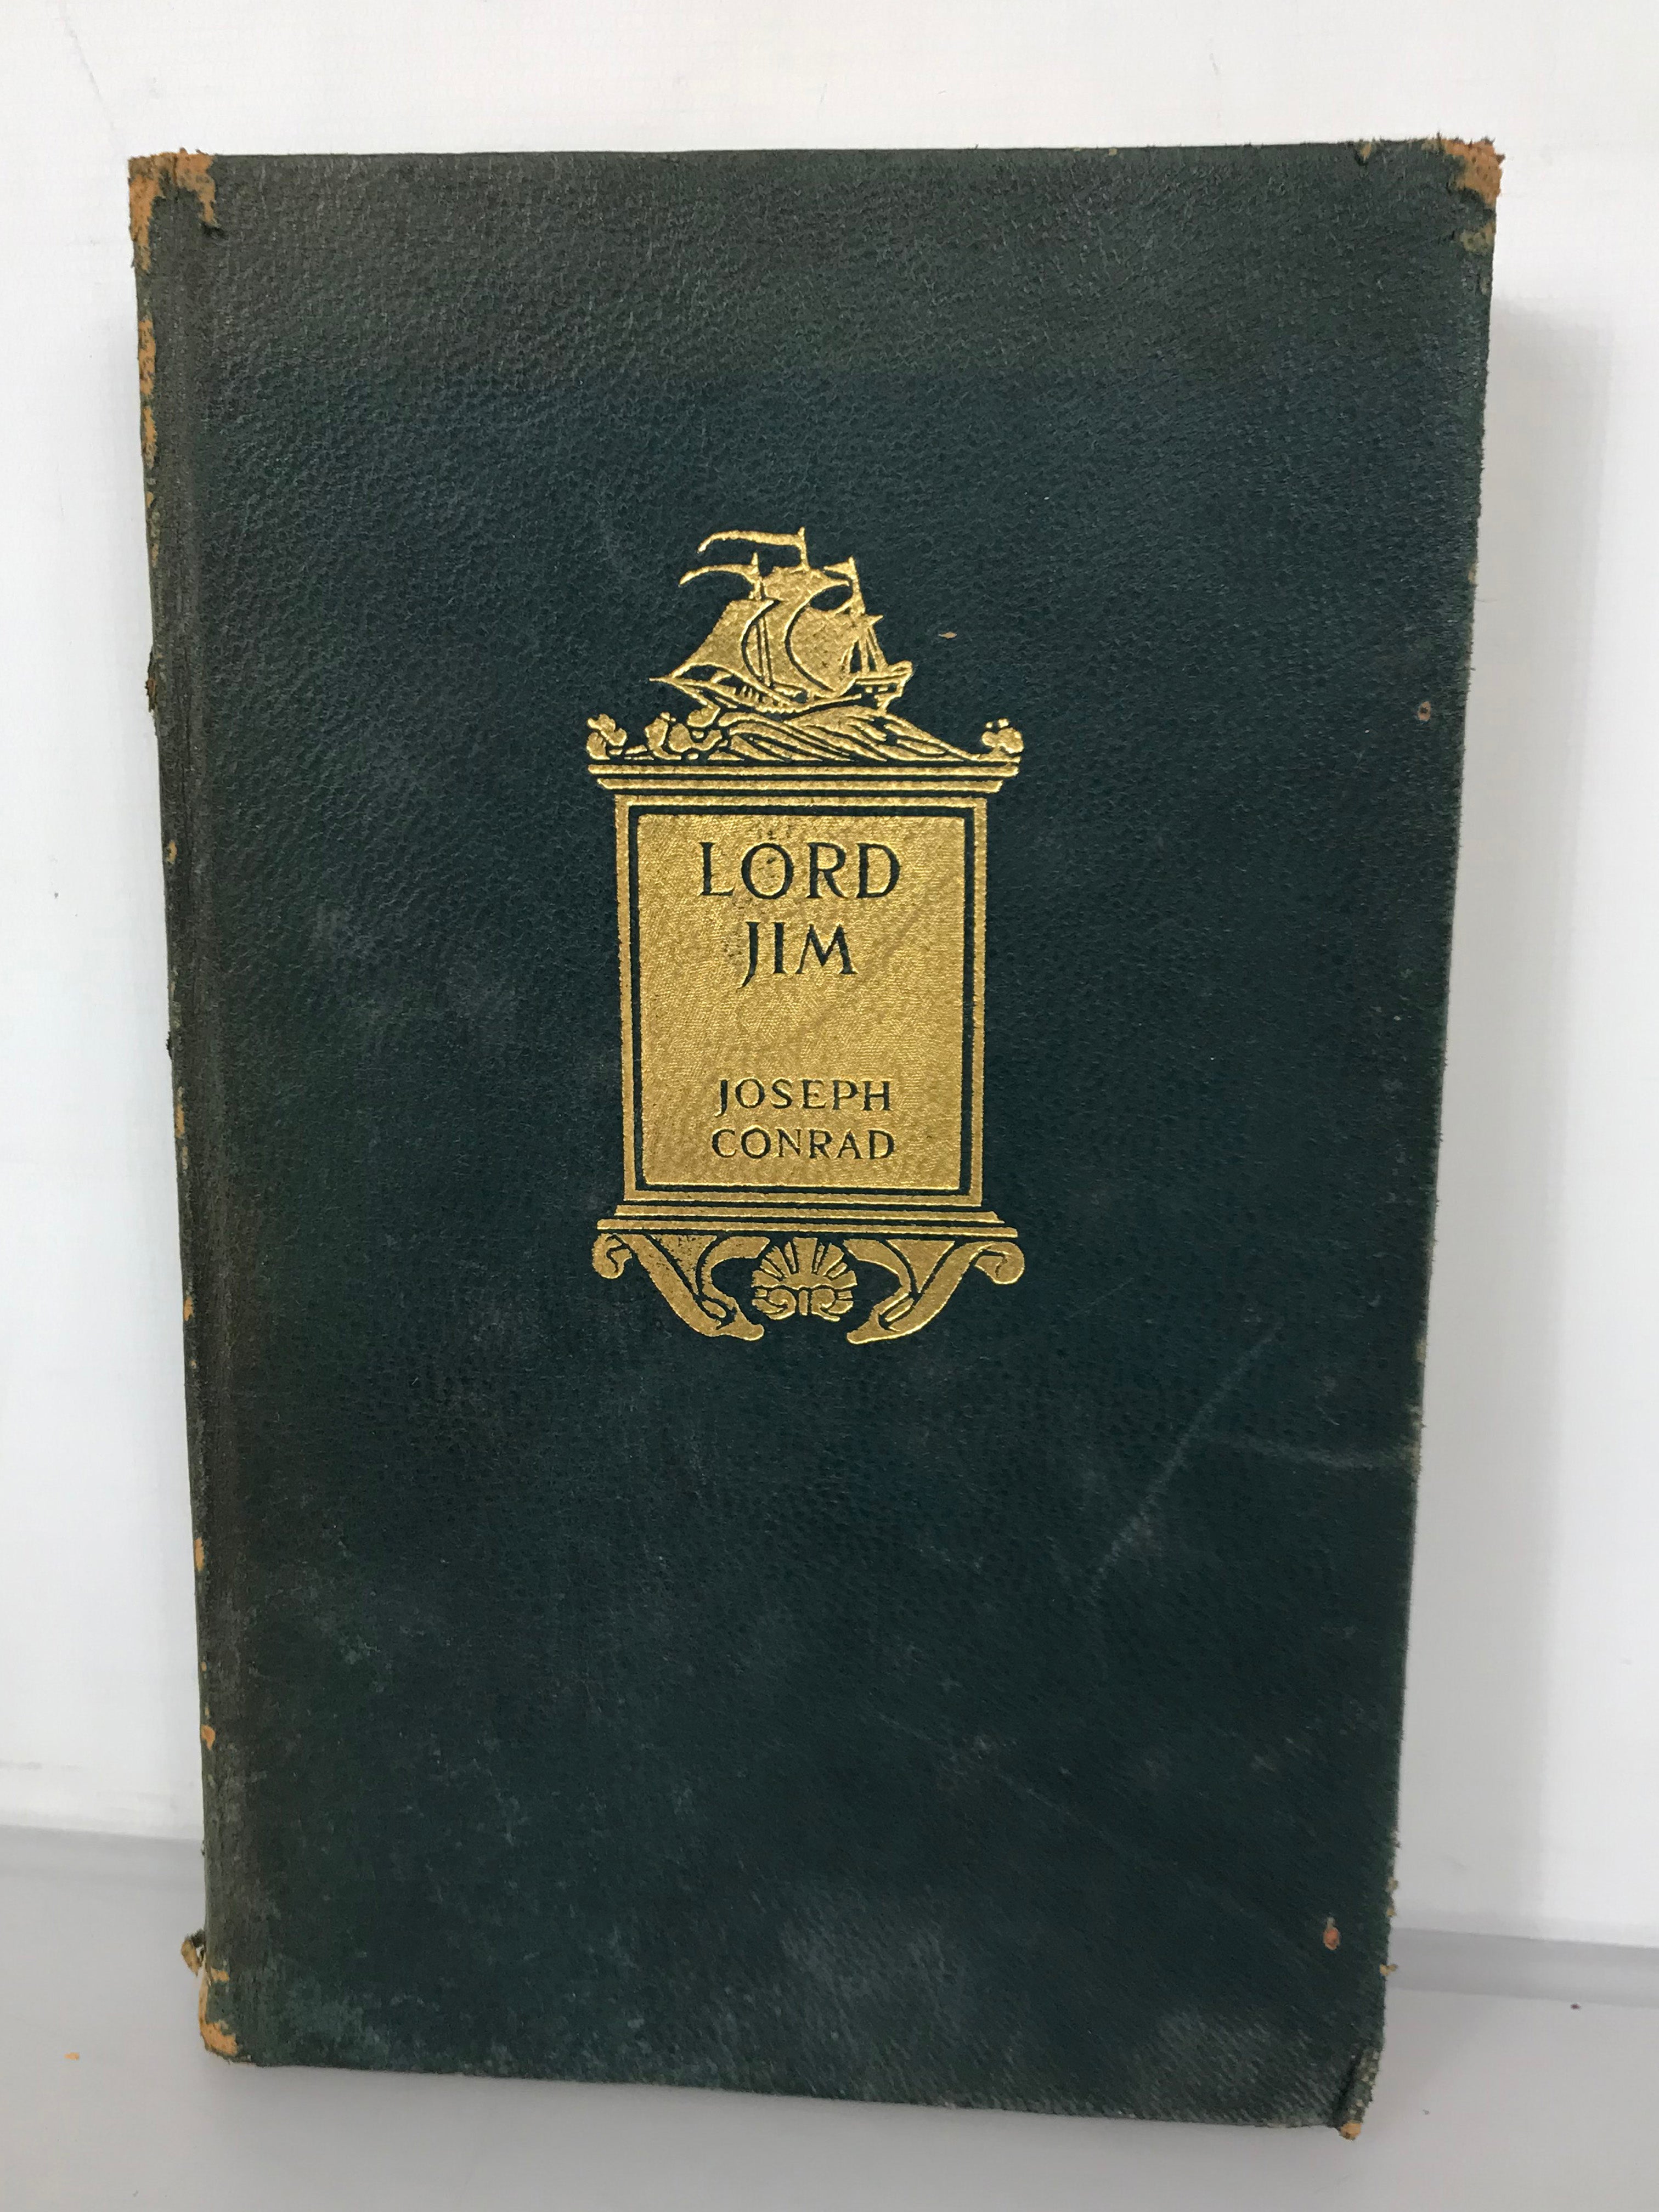 Lord Jim a Romance by Joseph Conrad 1920 Doubleday